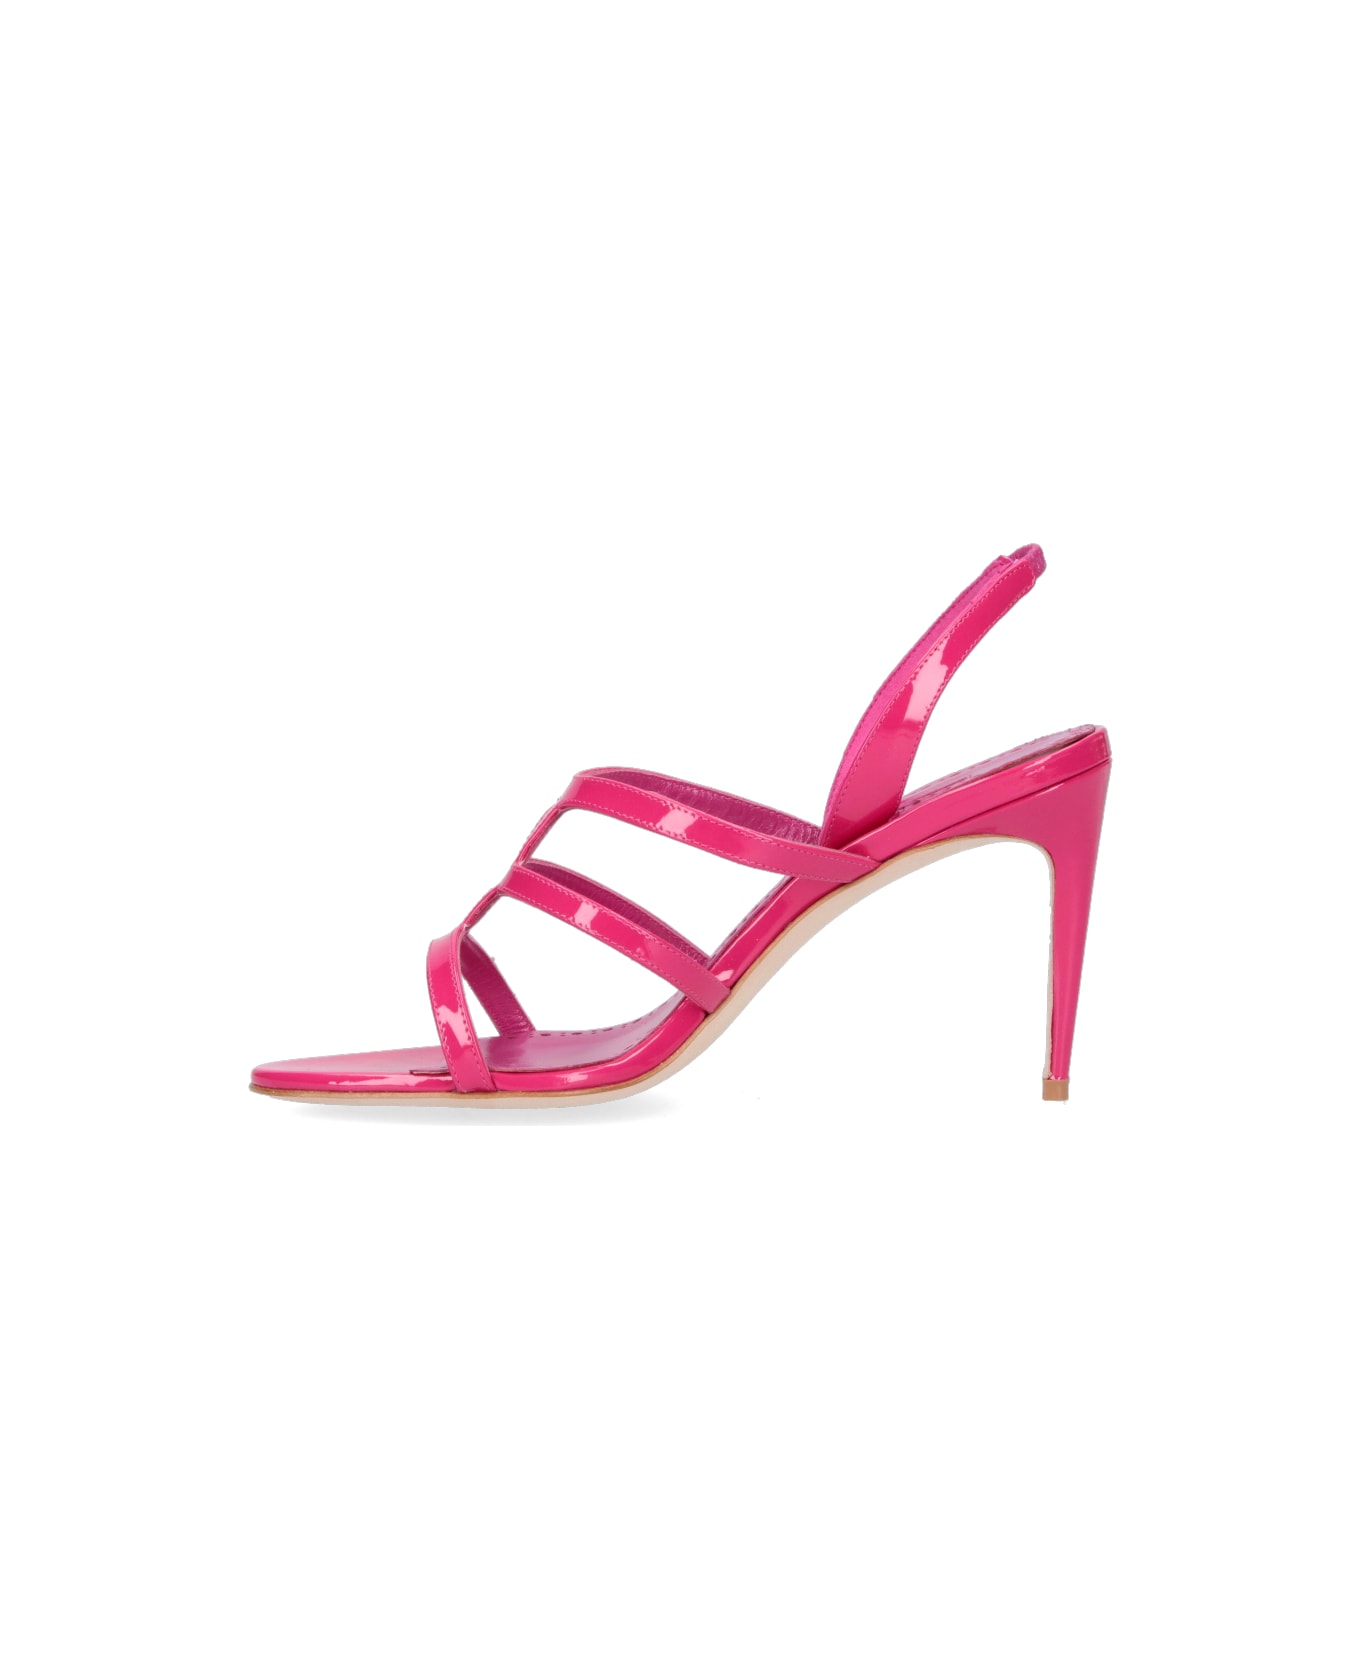 Manolo Blahnik Sandals "artysa" - Pink